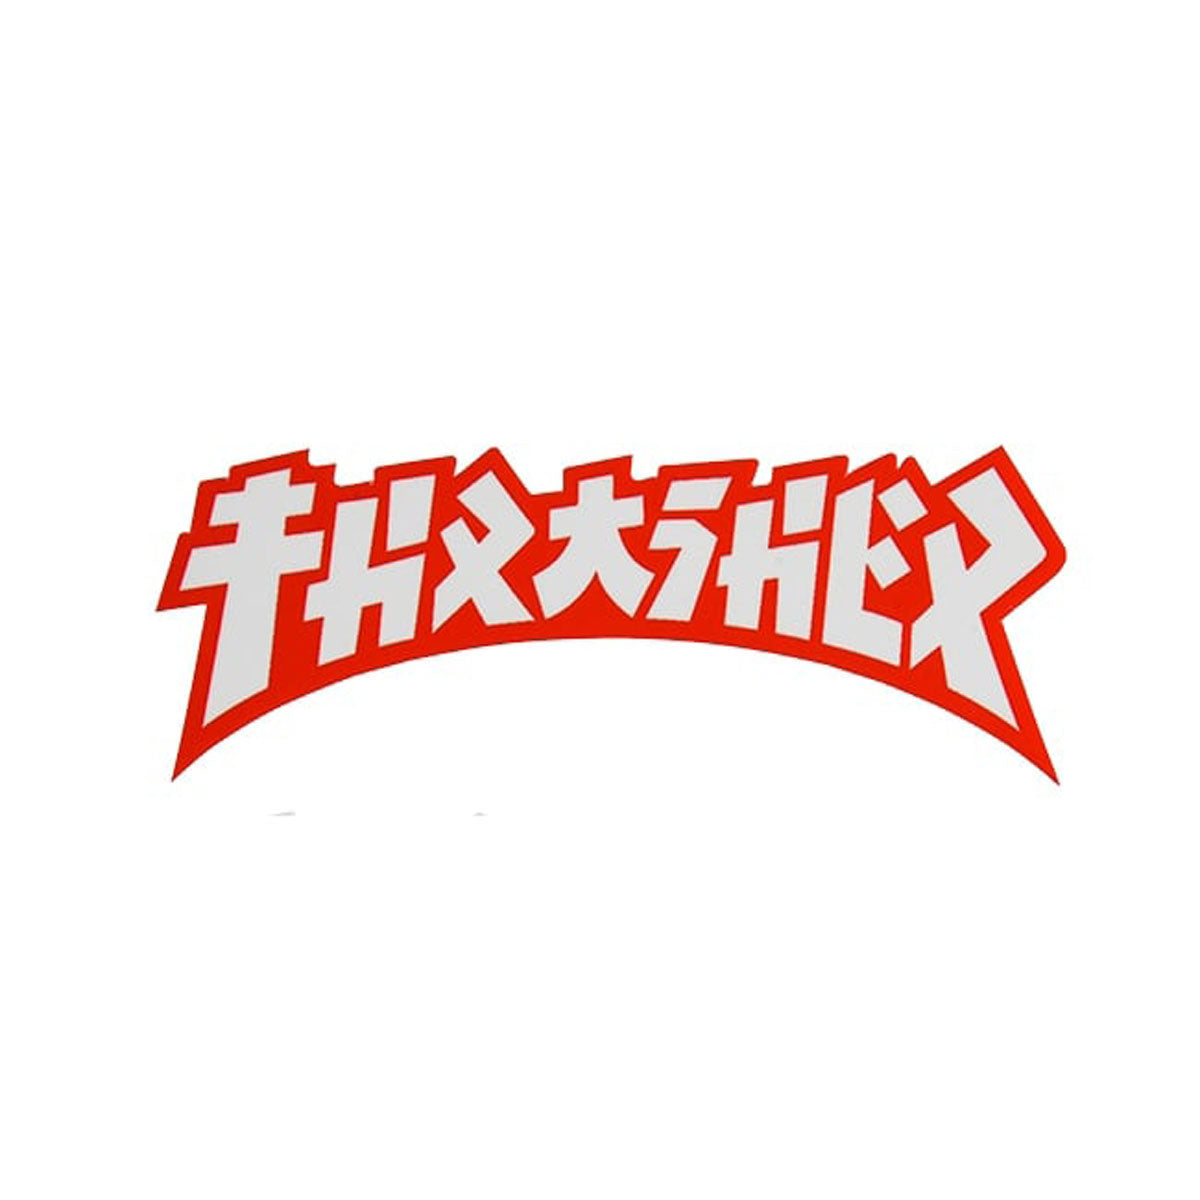 Thrasher Godzilla Die Cut Sticker image 1